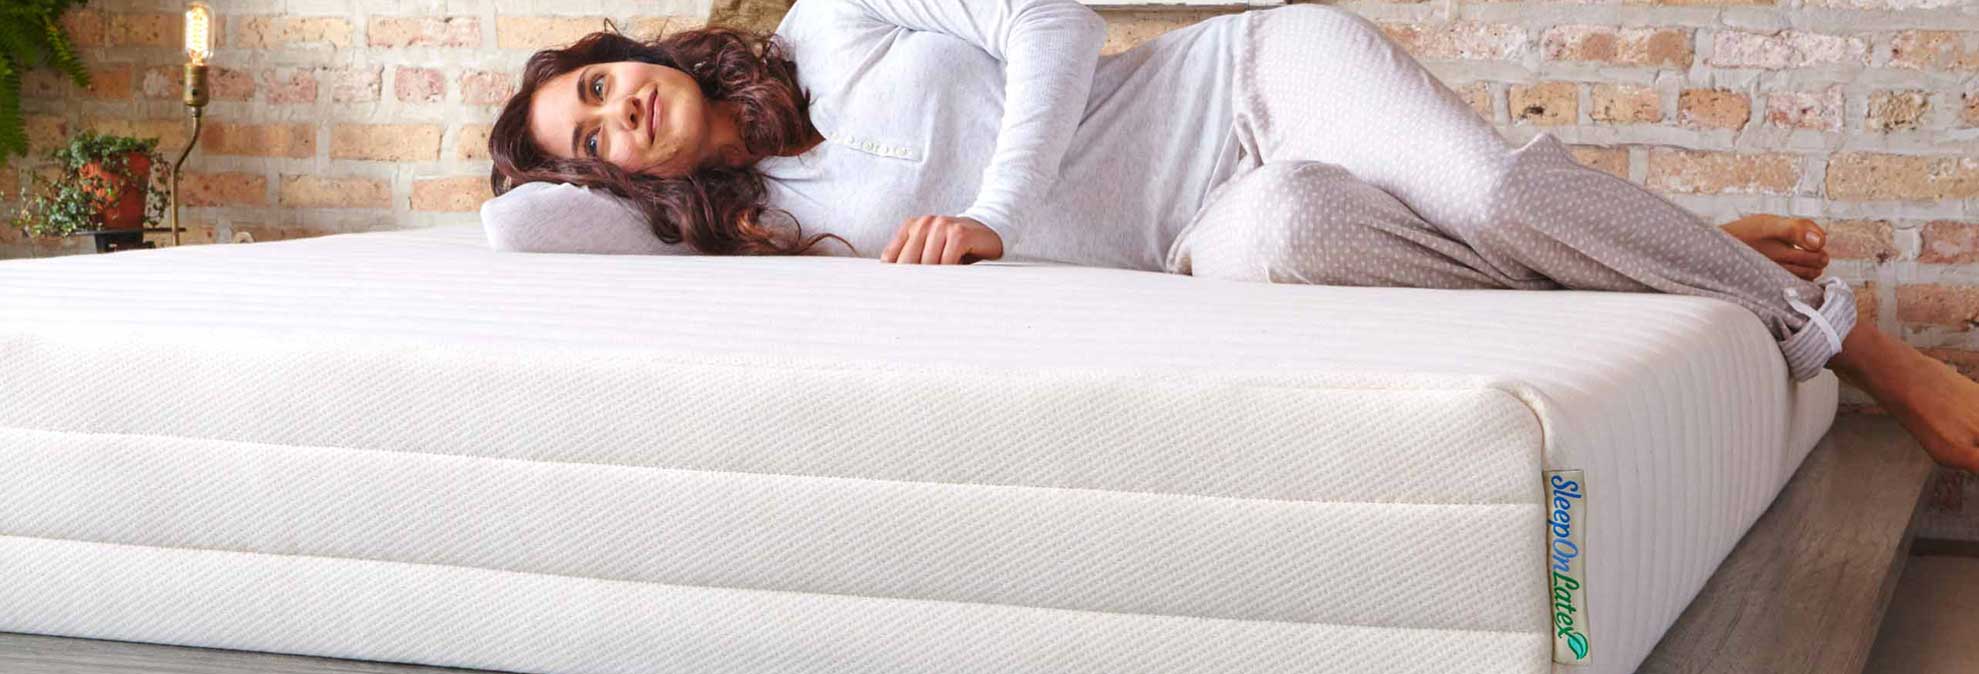 consumer reports best full size mattress